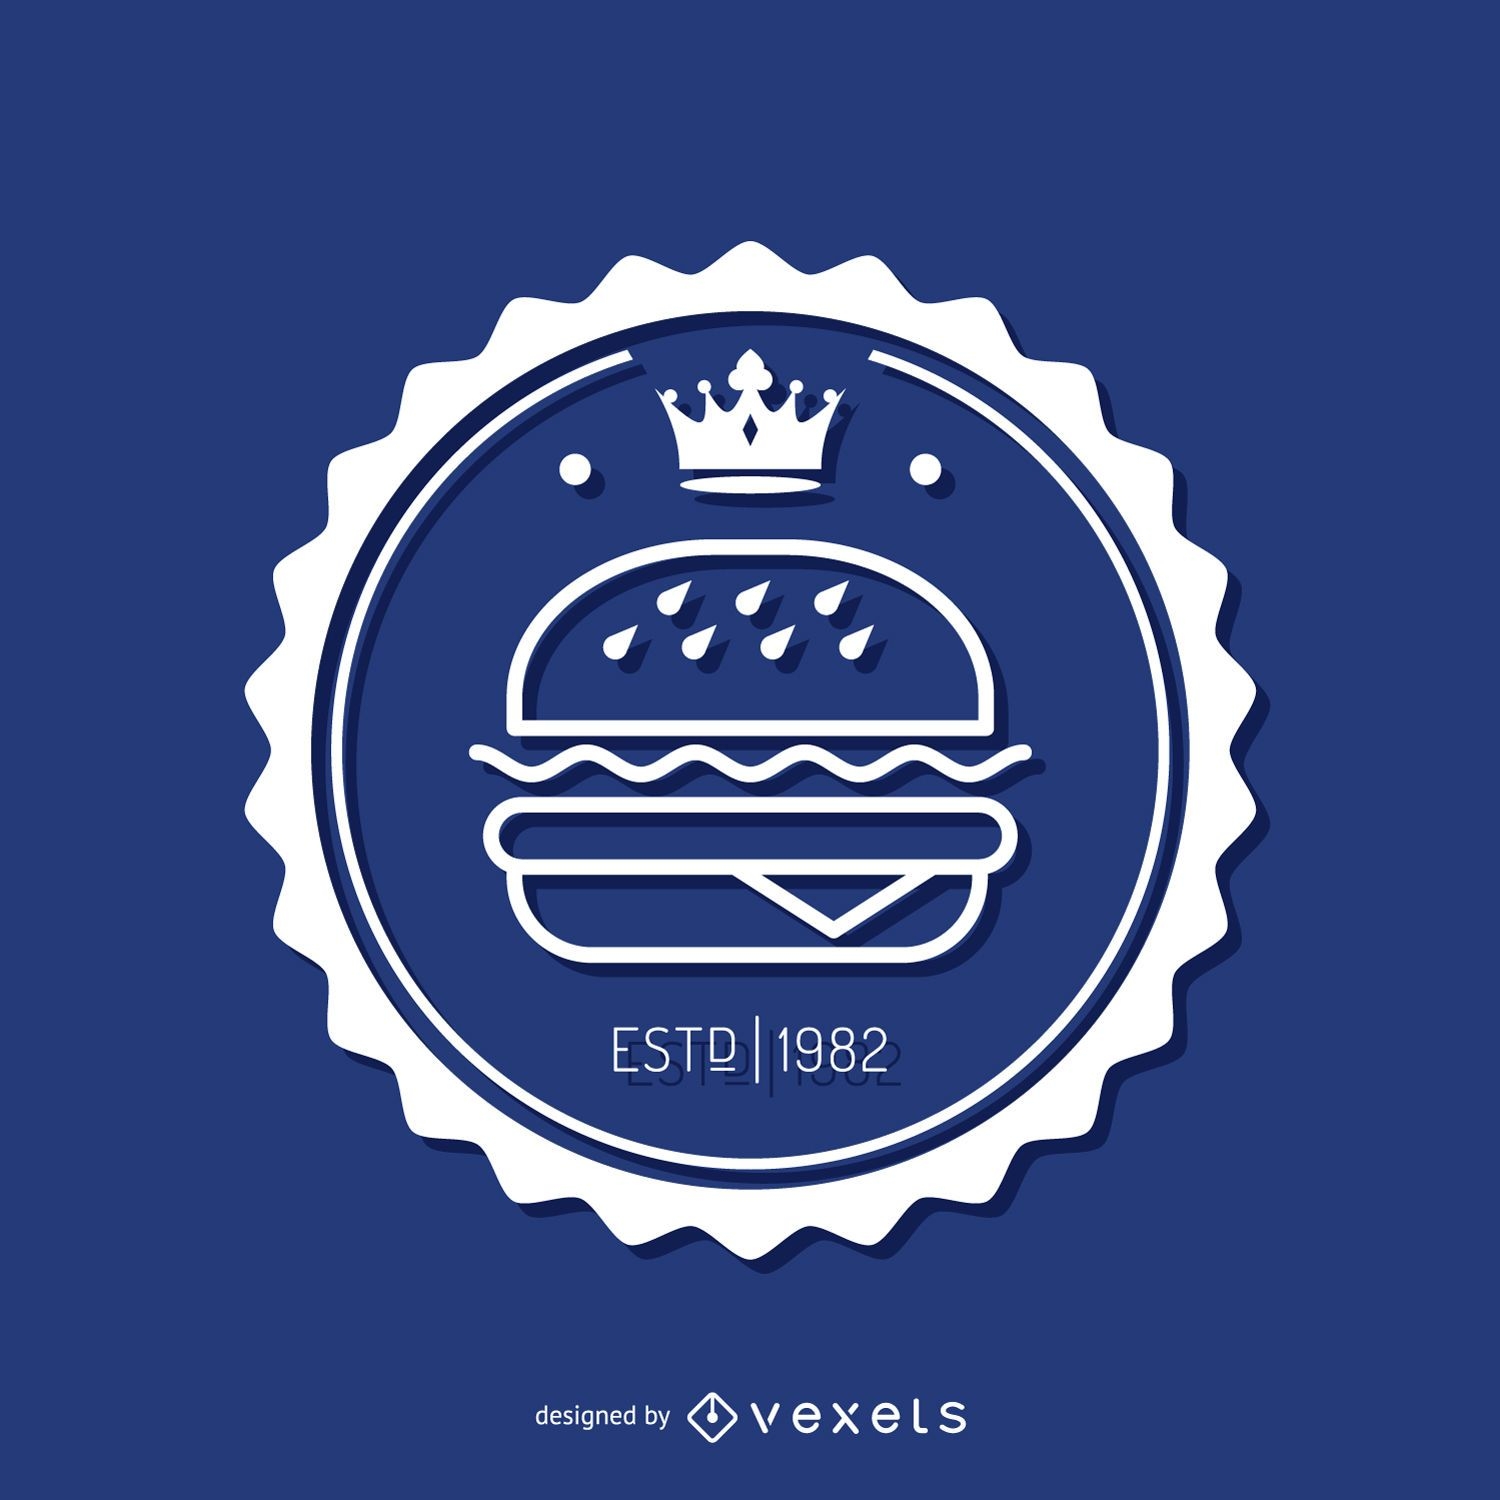 Circular fast food insignia